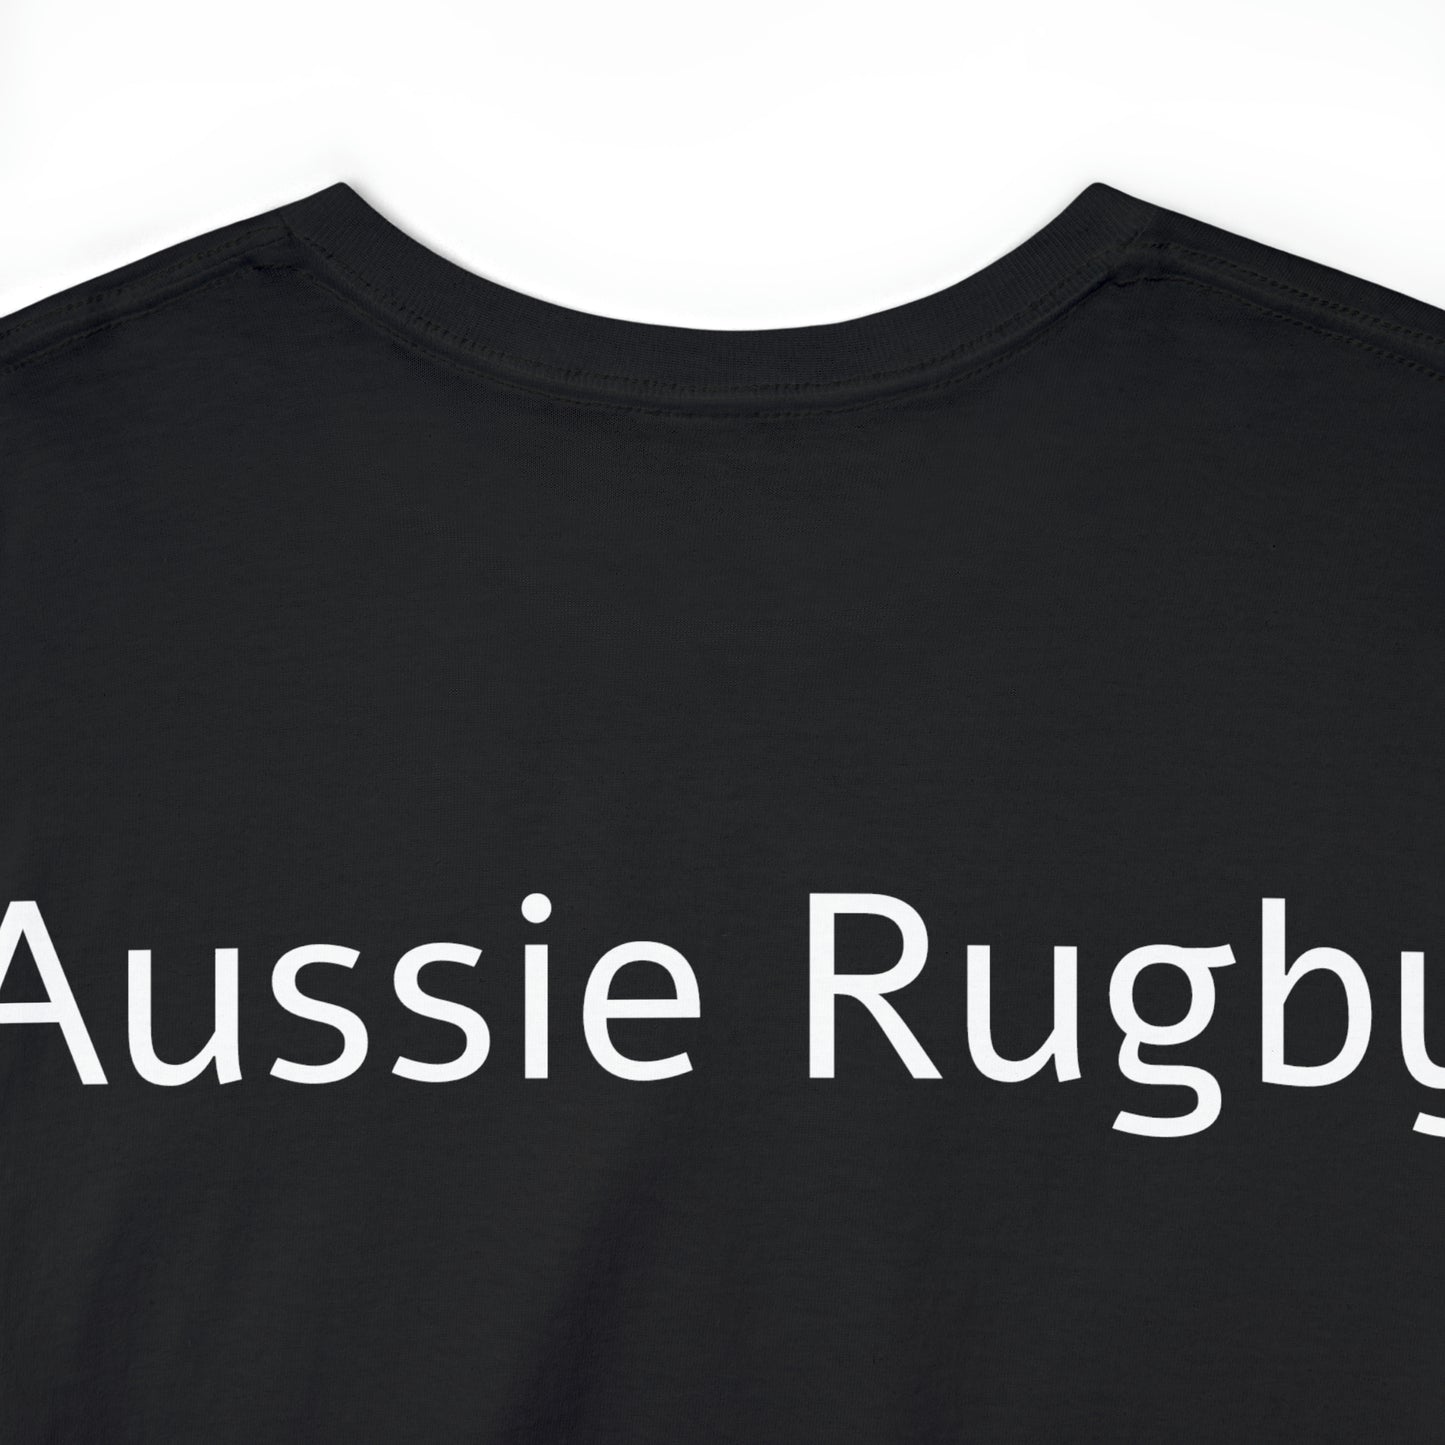 Ready Aussies - black shirts